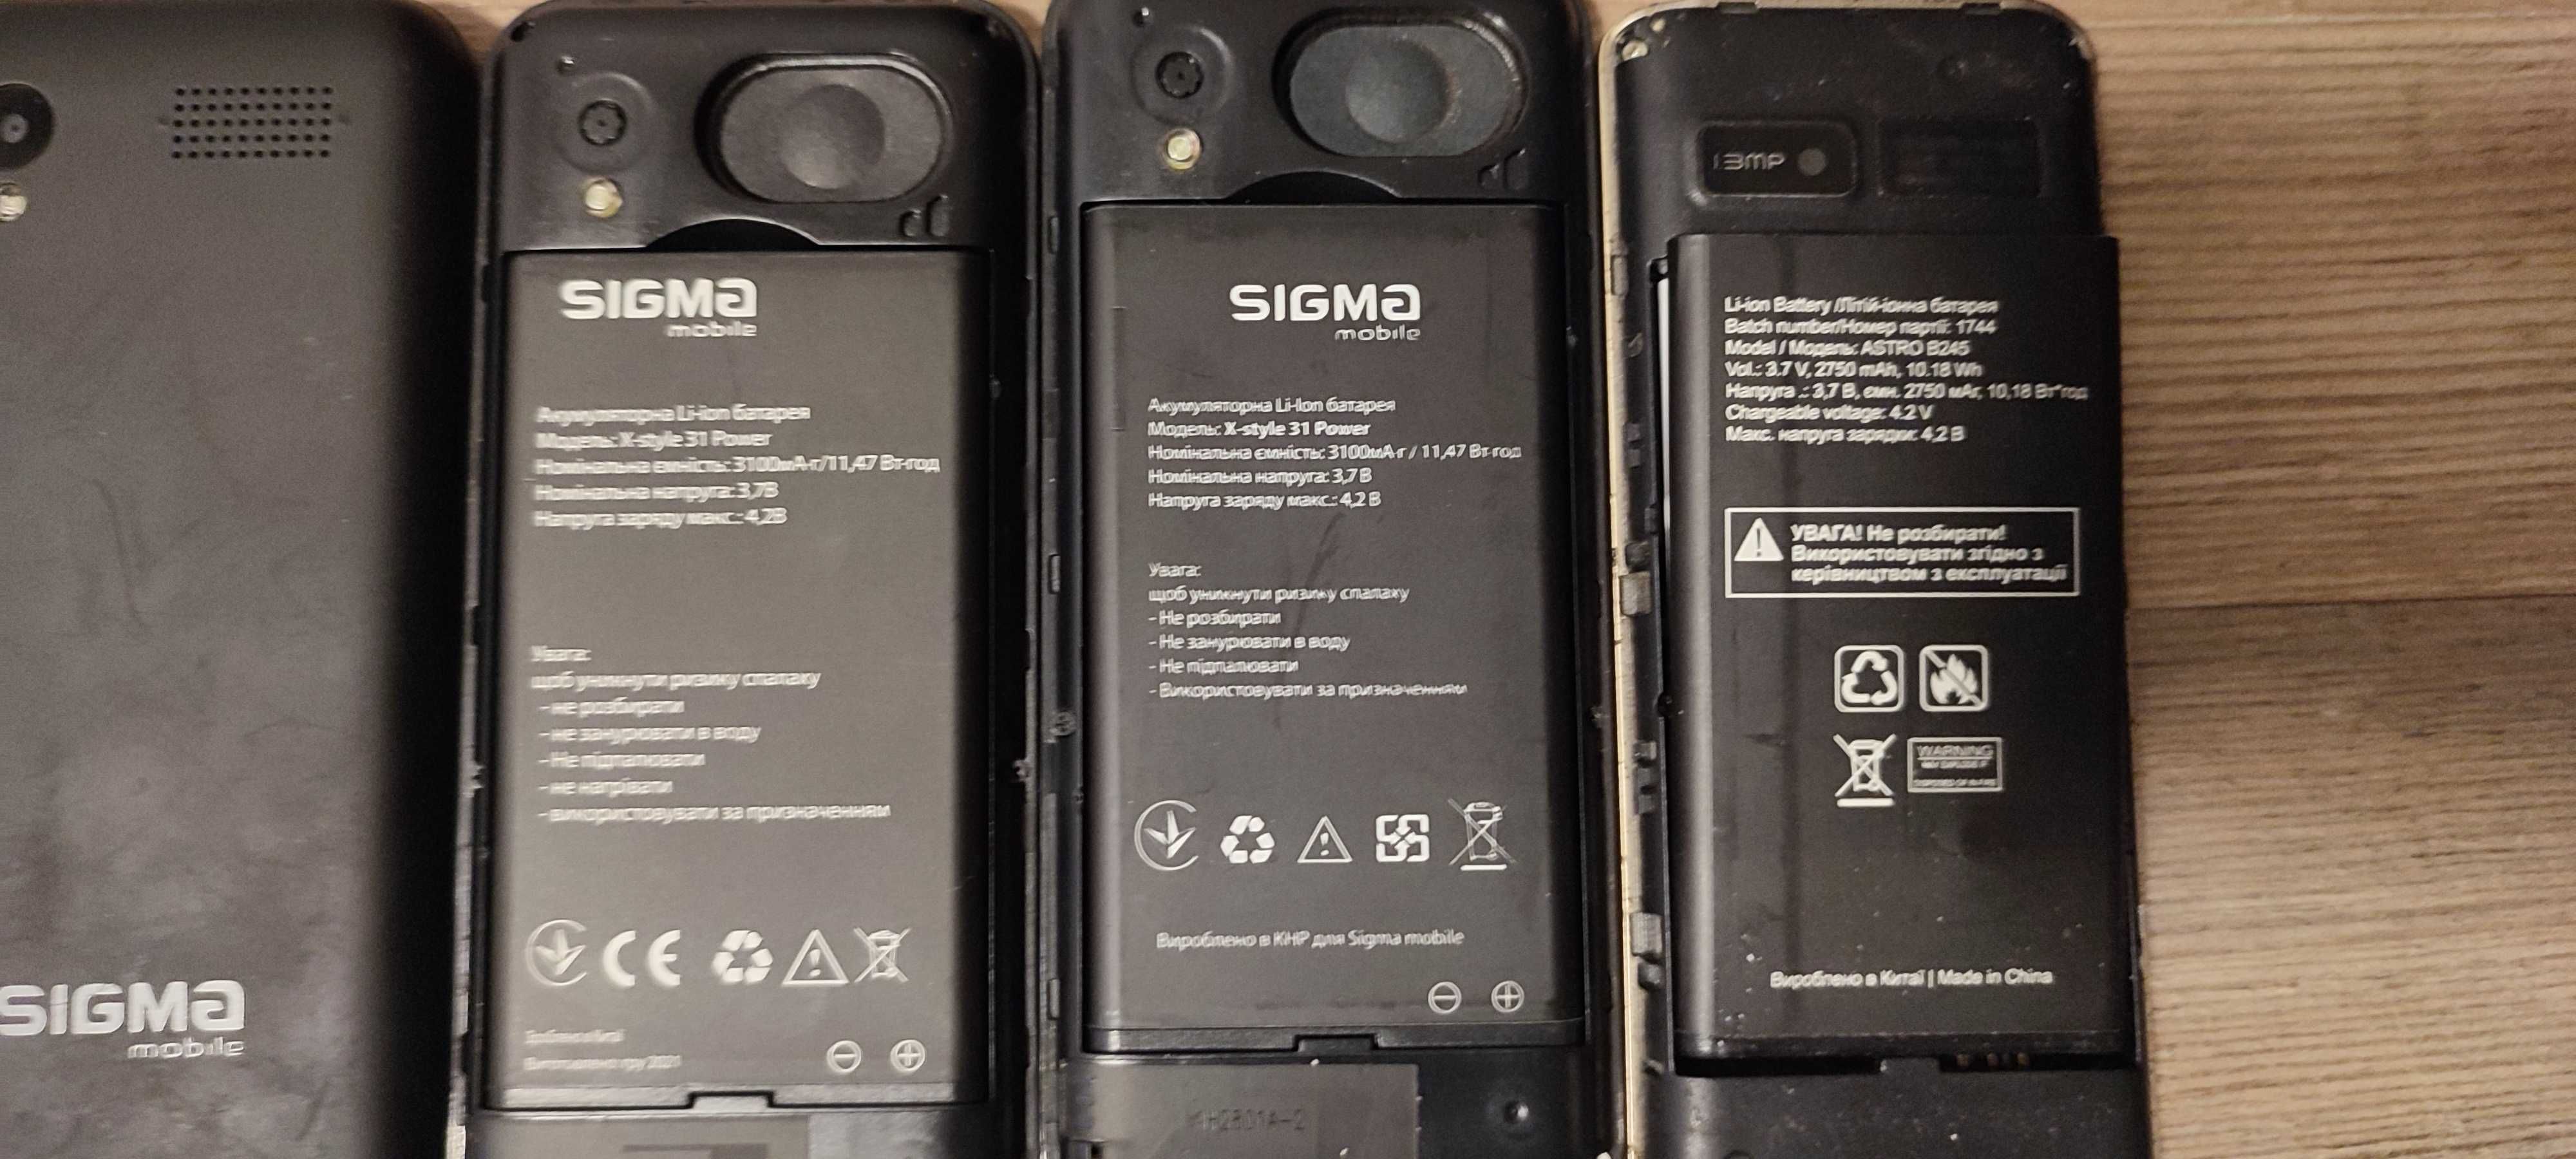 Телефони Sigma mobile X-Style 31 Power, Аккумулятори